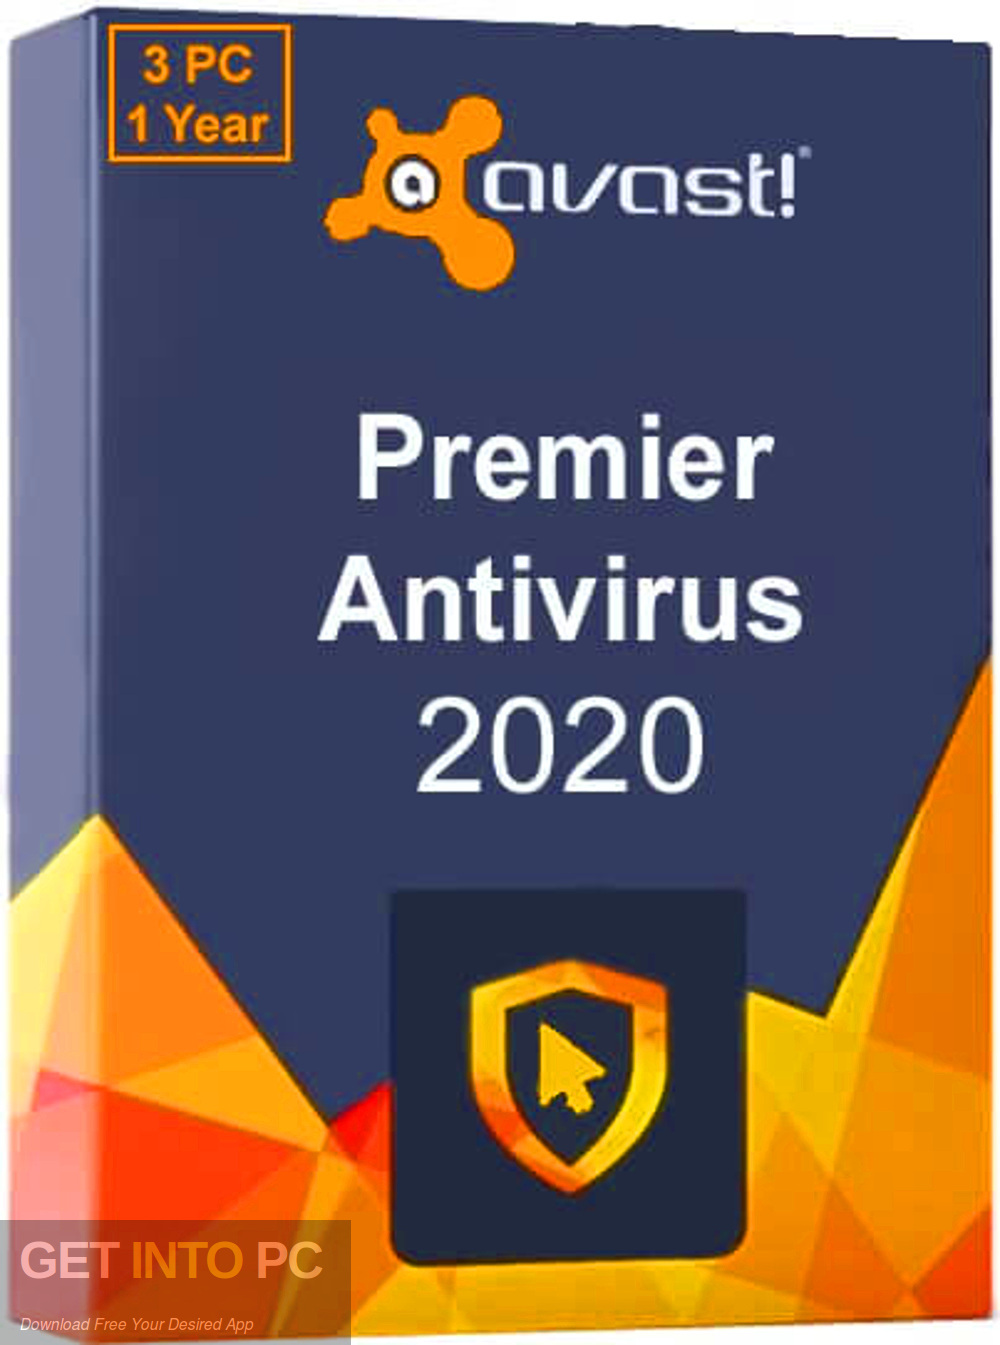 Download Avast Antivirus Setup For Windows 10